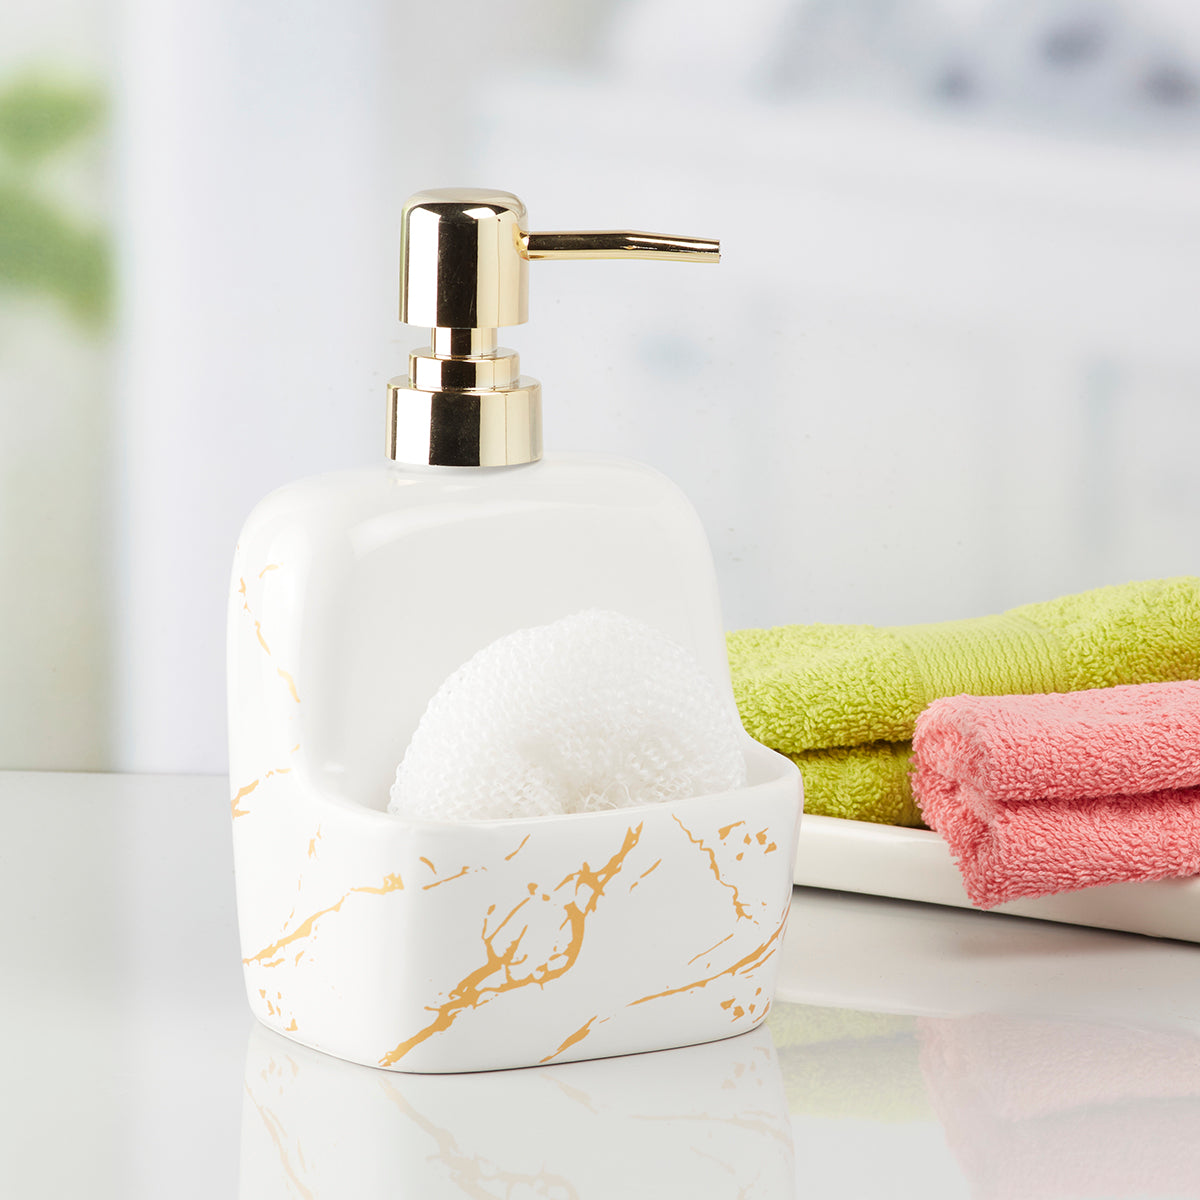 Ceramic Soap Dispenser handwash Pump for Bathroom, Set of 1, White/Gold (10204)